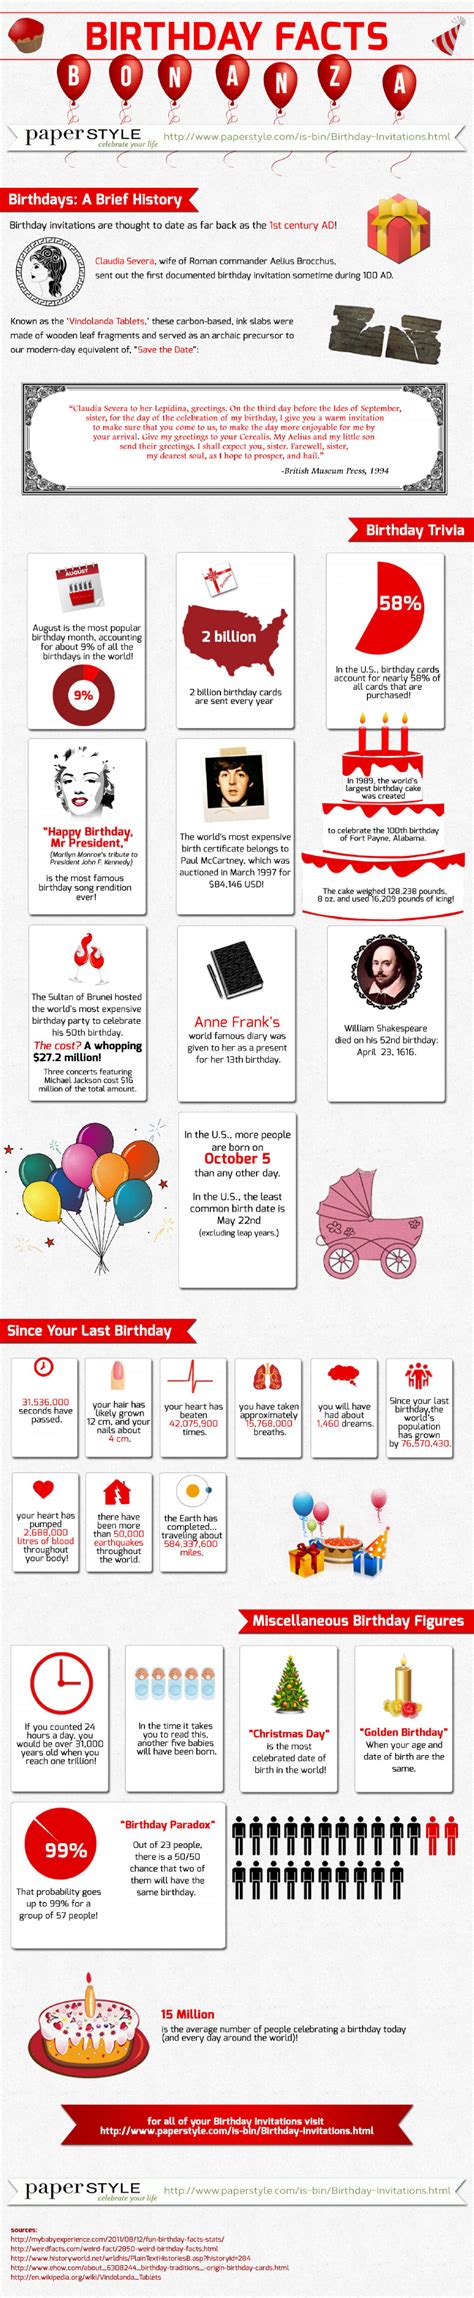 Free Printable Birthday Fun Facts
